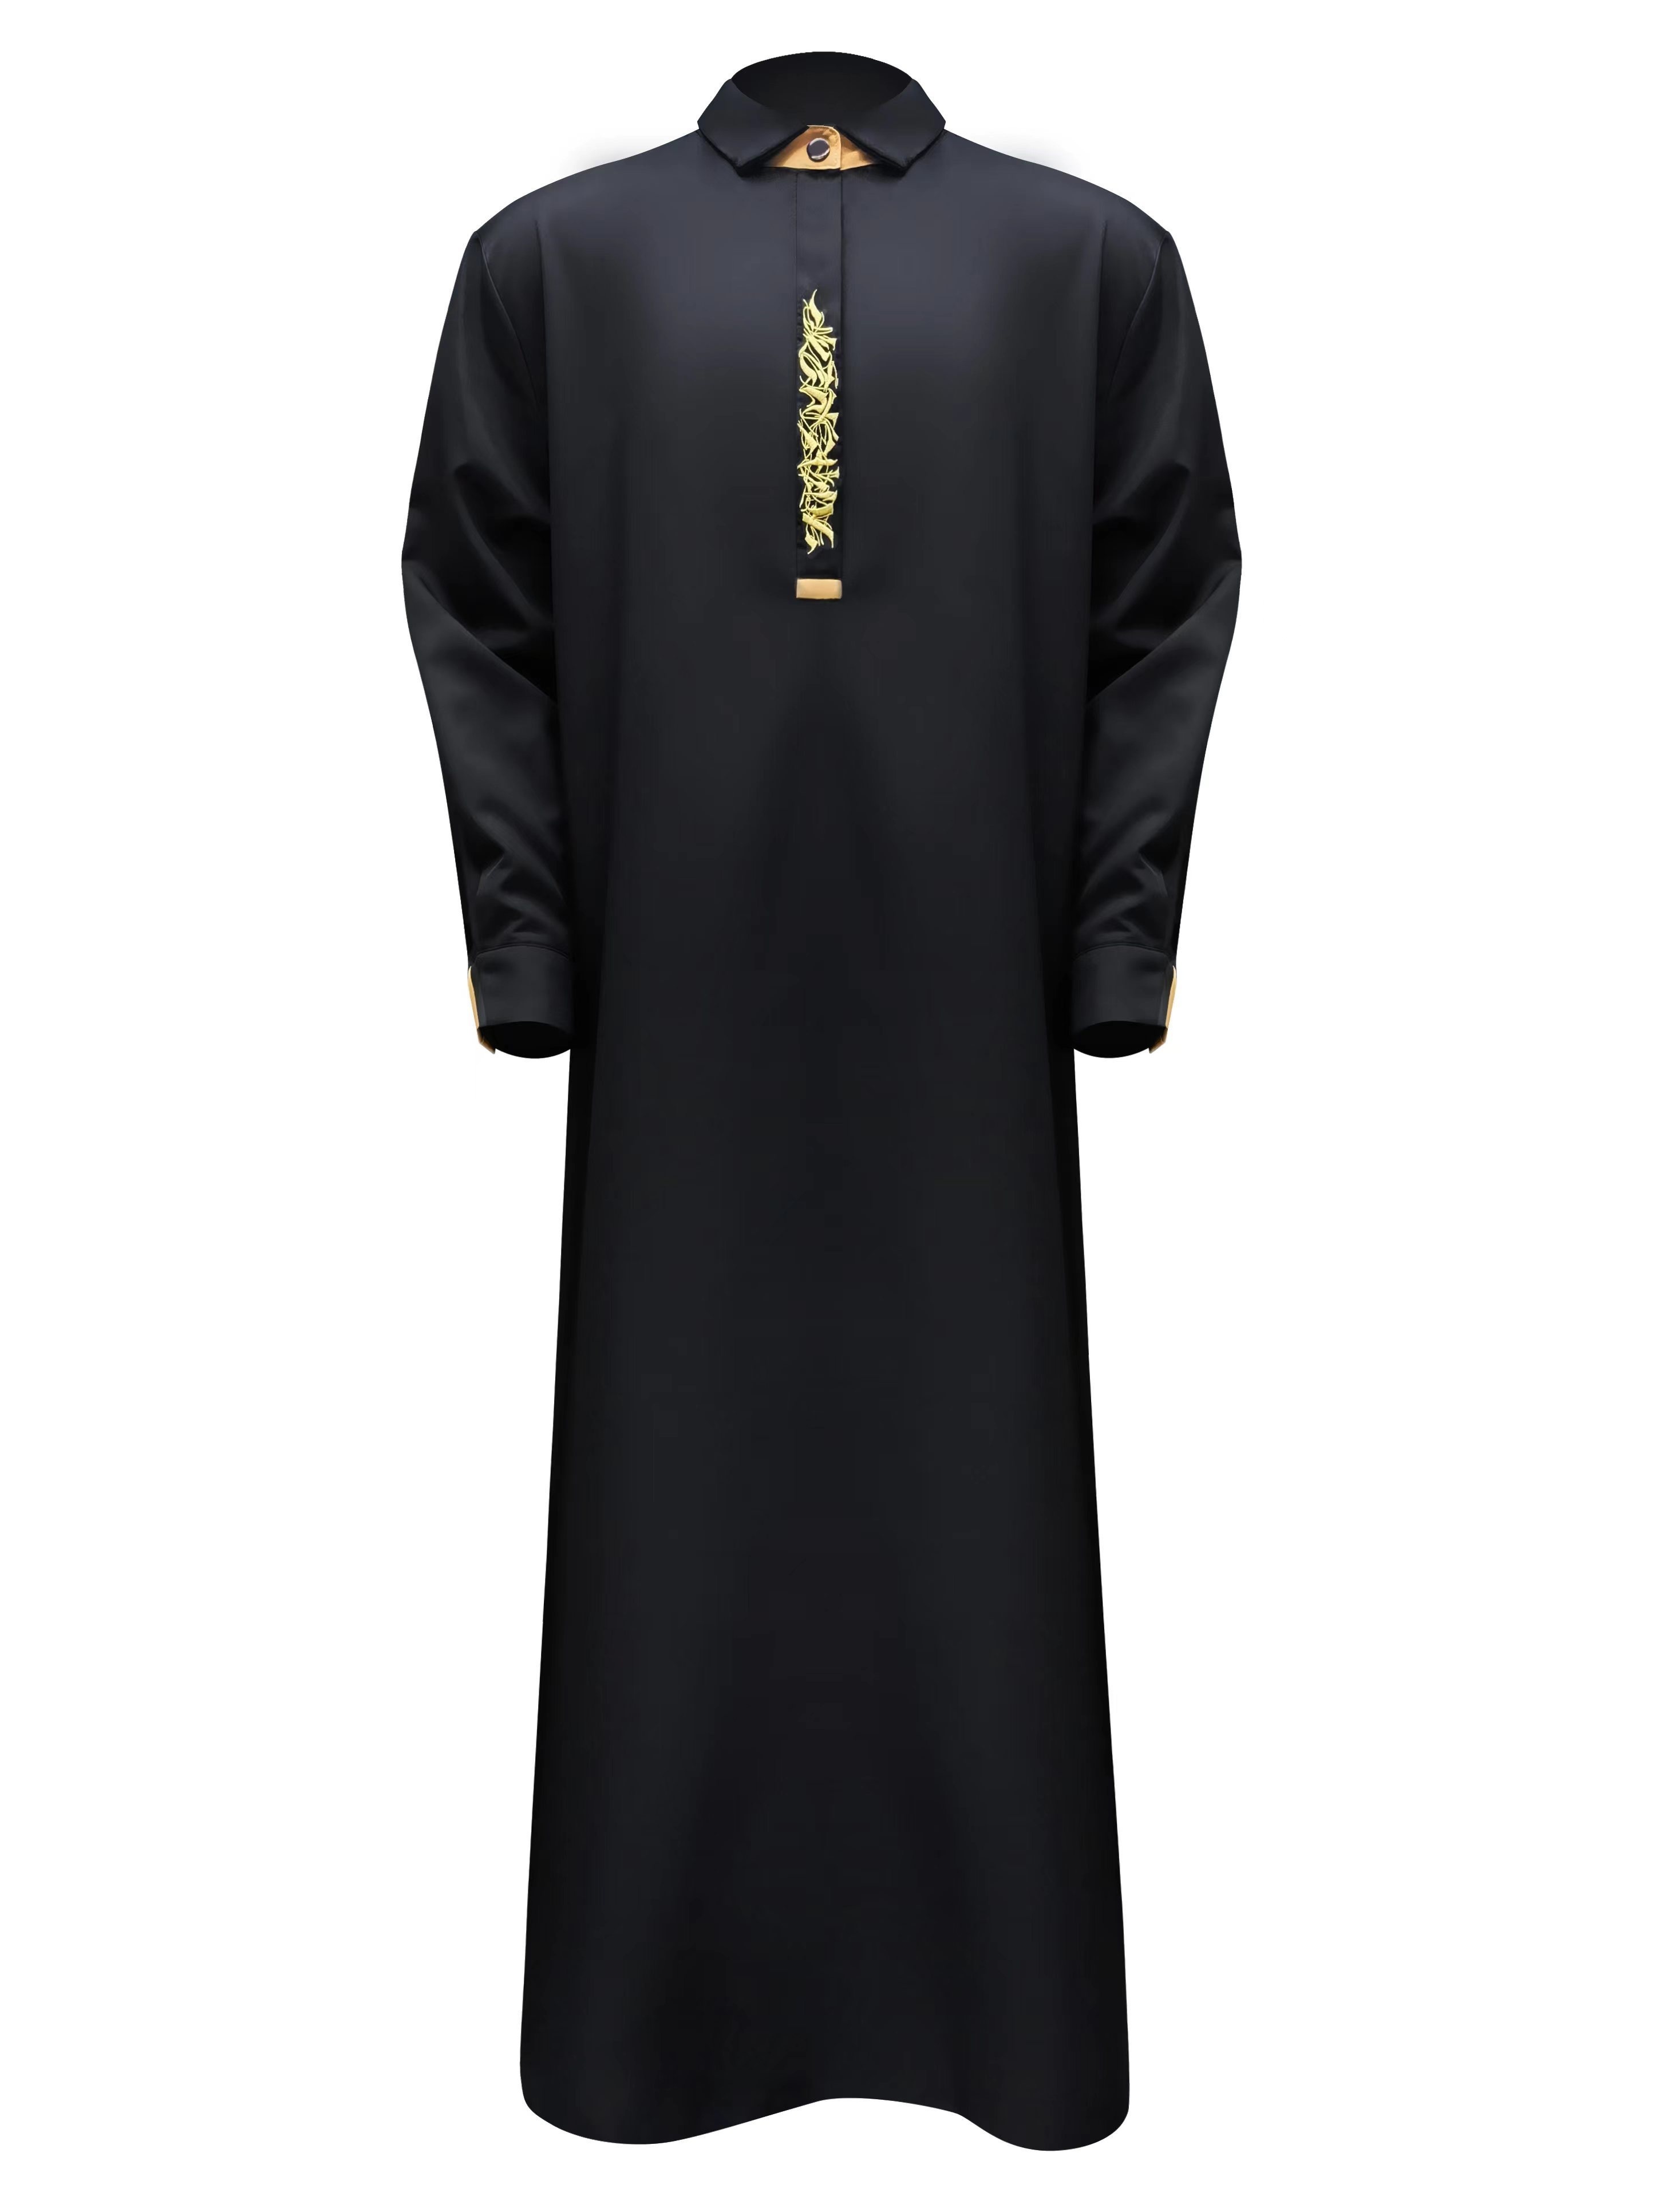 arab mens plus size black robe muslim casual embroidered jubba robe all season universal thobe jubba thawb for men mens clothing plus size